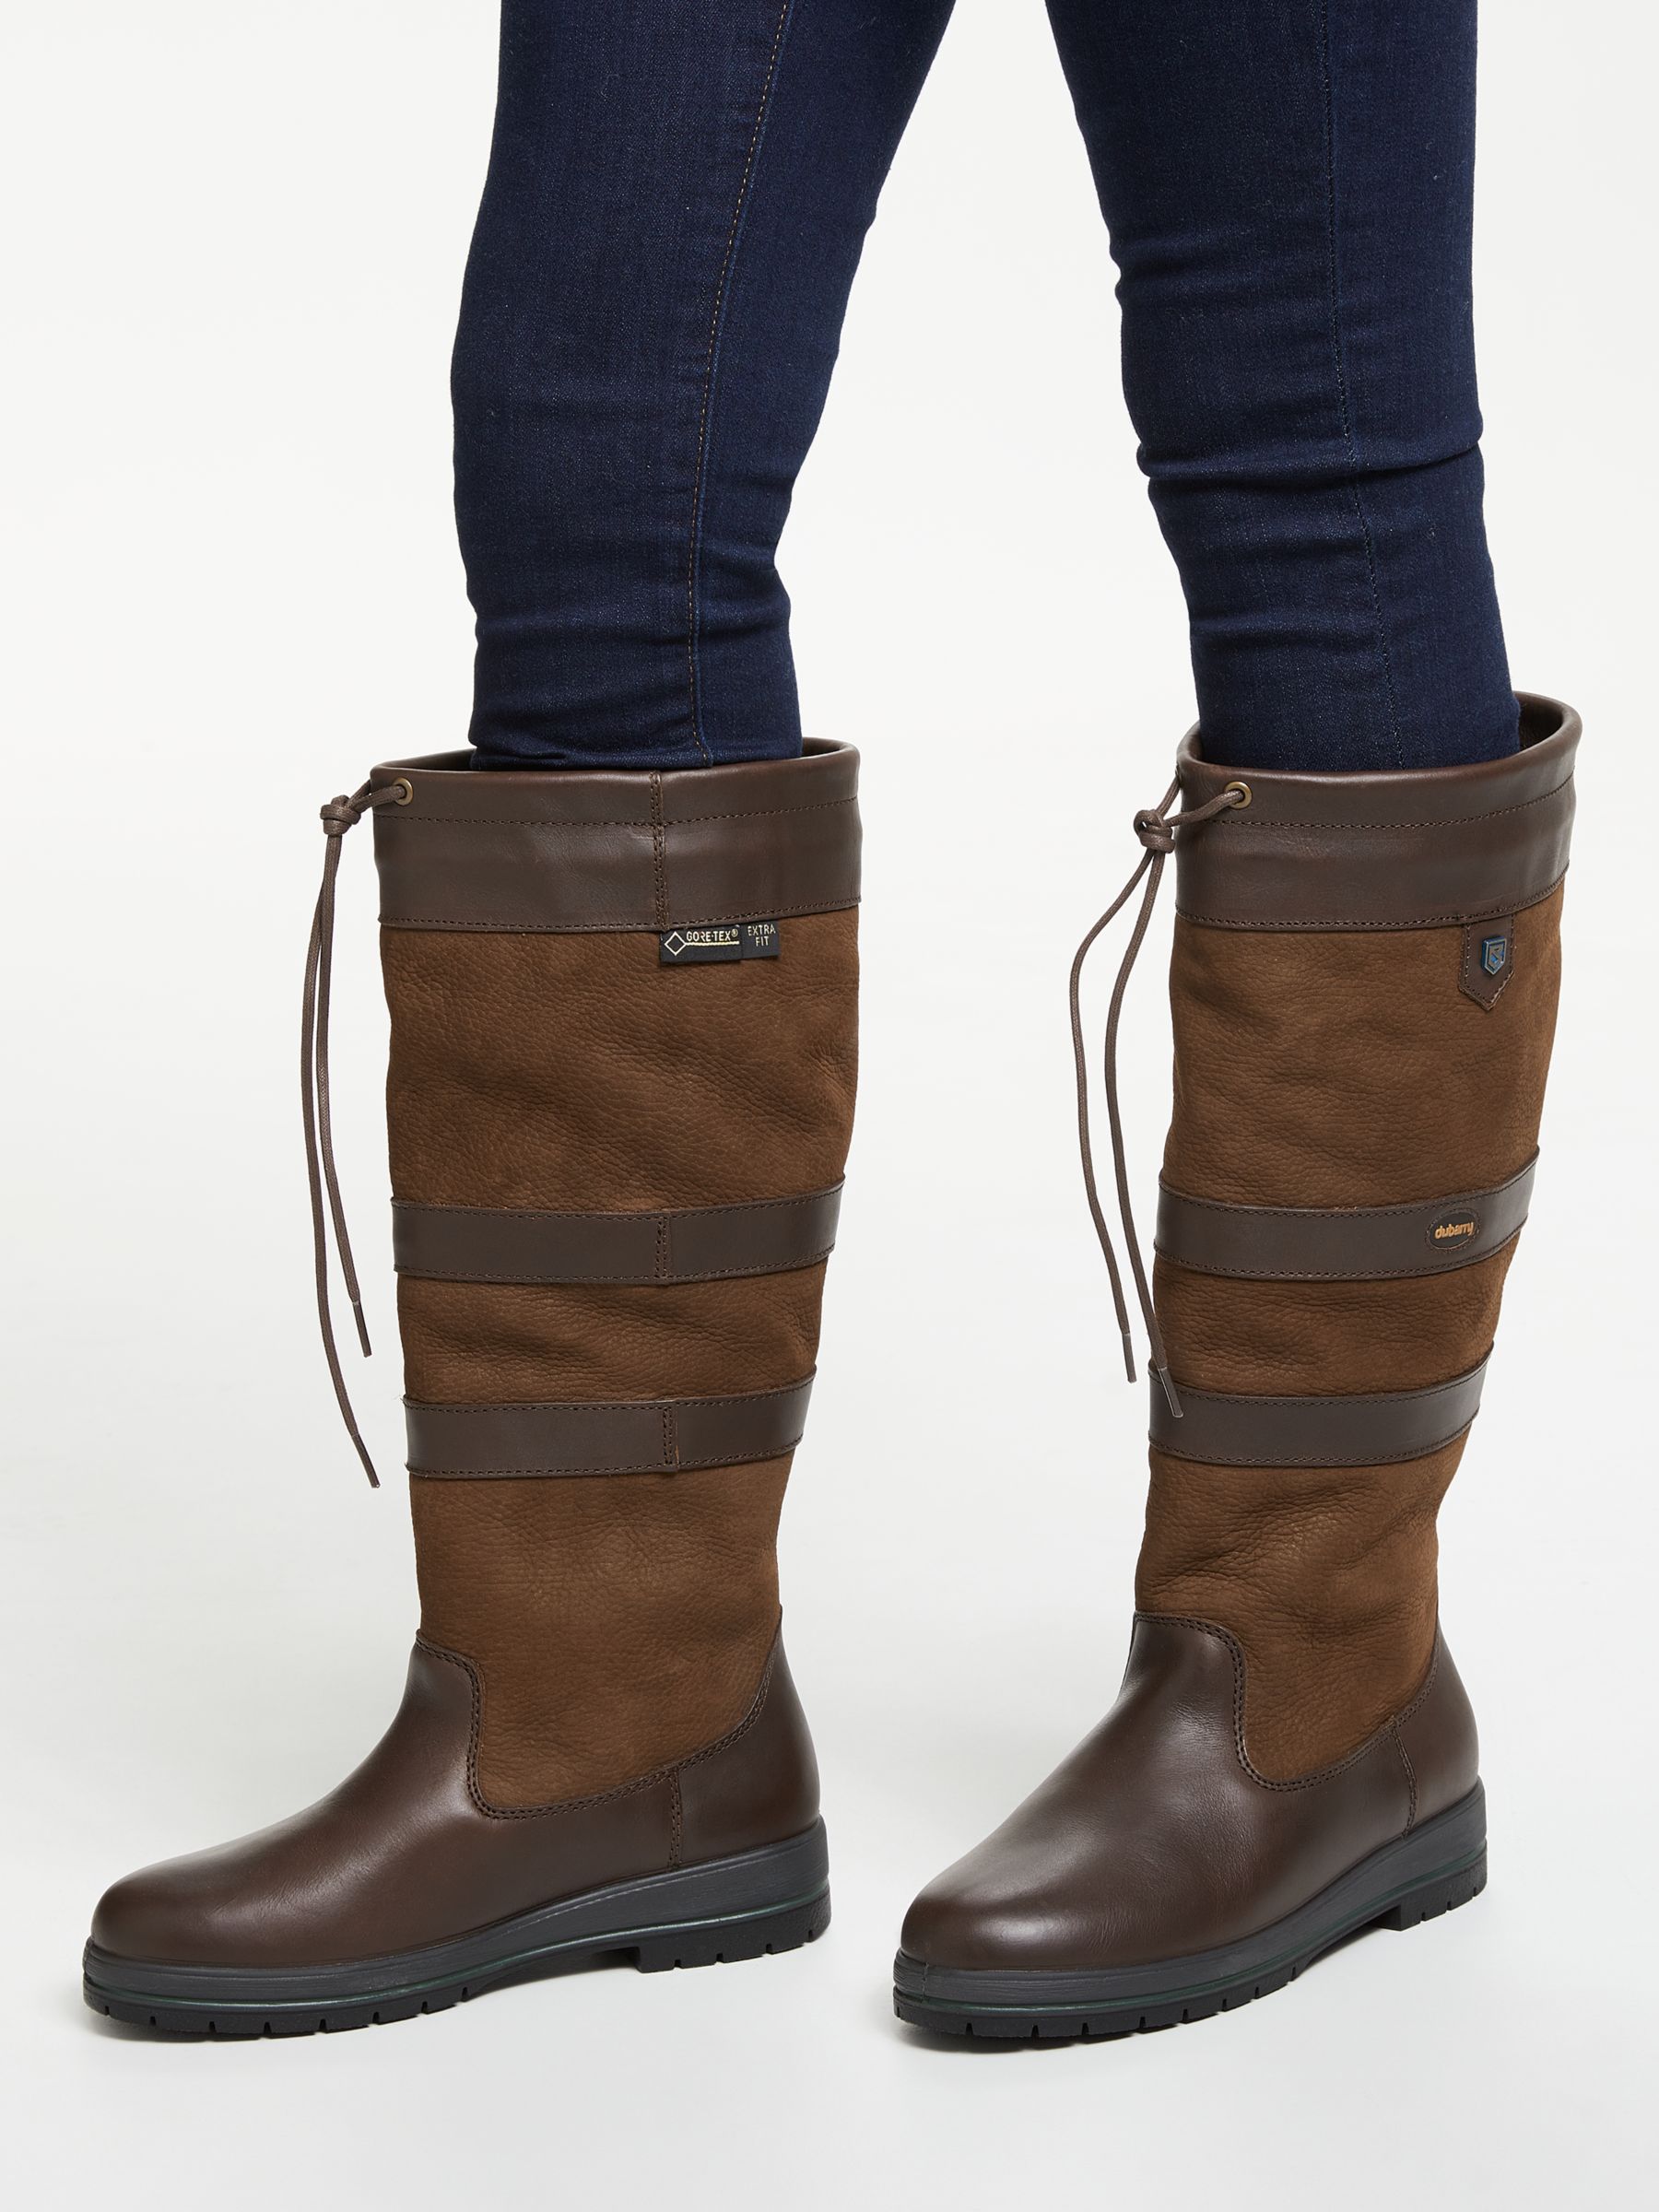 Dum Om indstilling Åben Dubarry Galway Gortex Wide Calf Waterproof Knee High Boots, Walnut Leather  at John Lewis & Partners